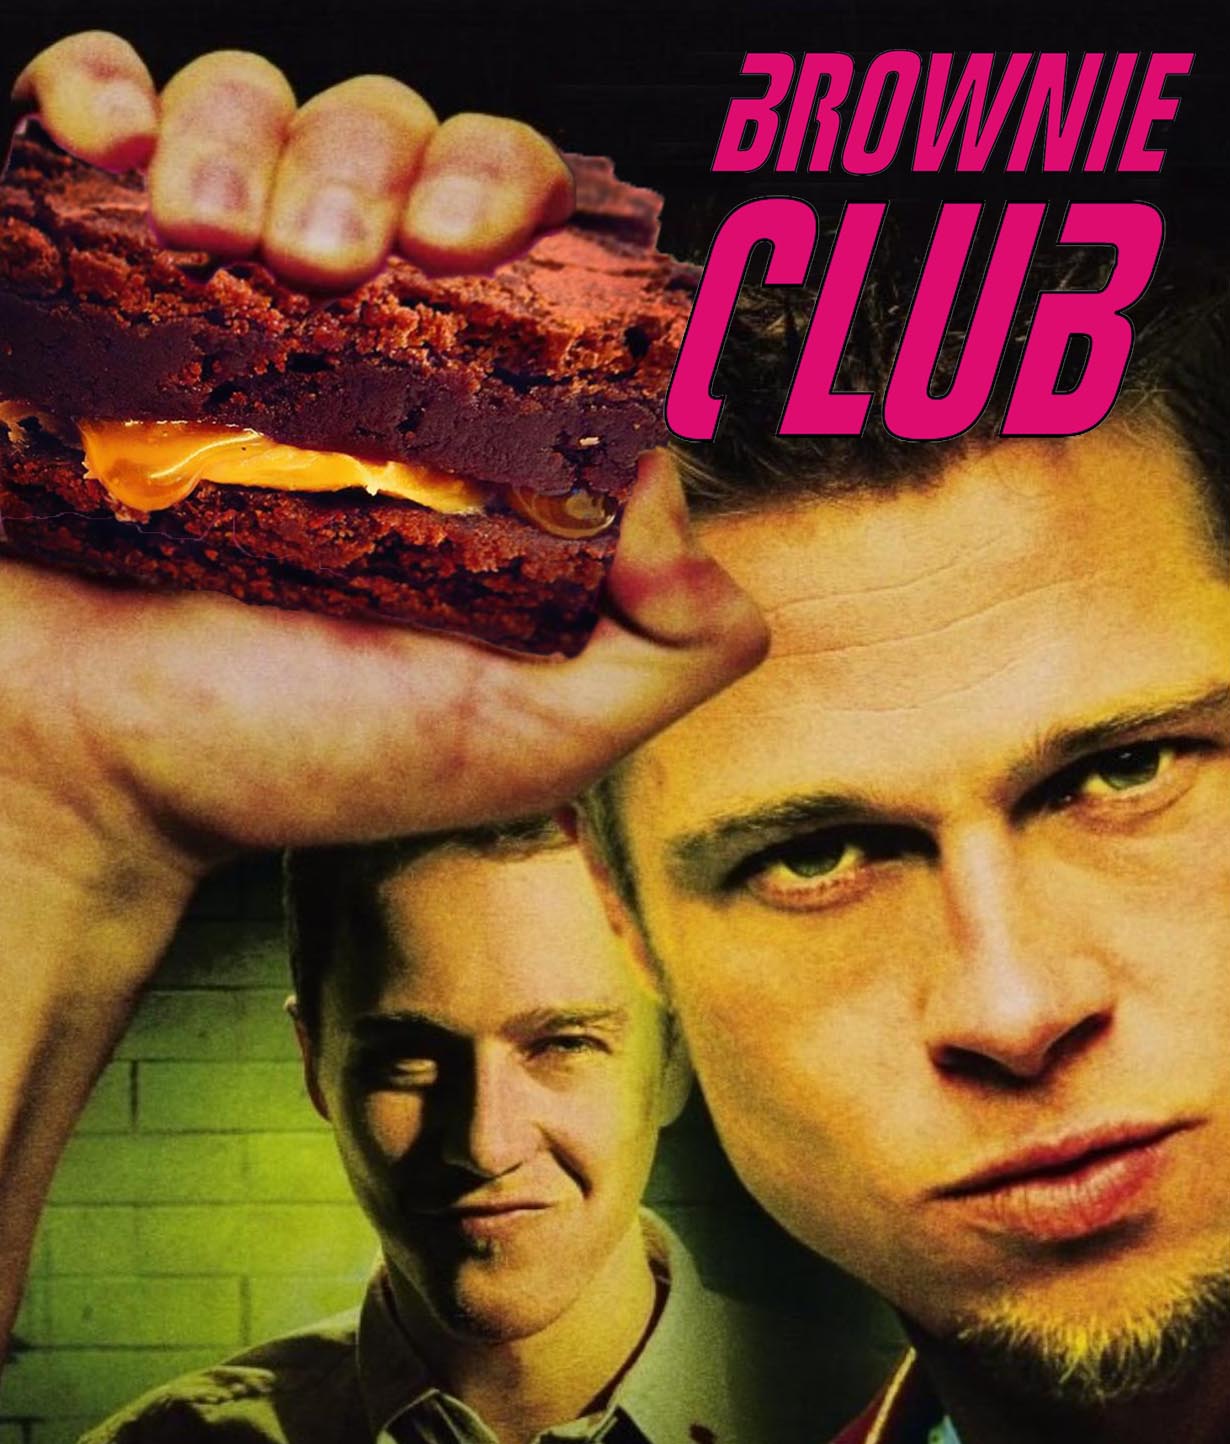 Brownie Heaven Subscription - Brownie Club